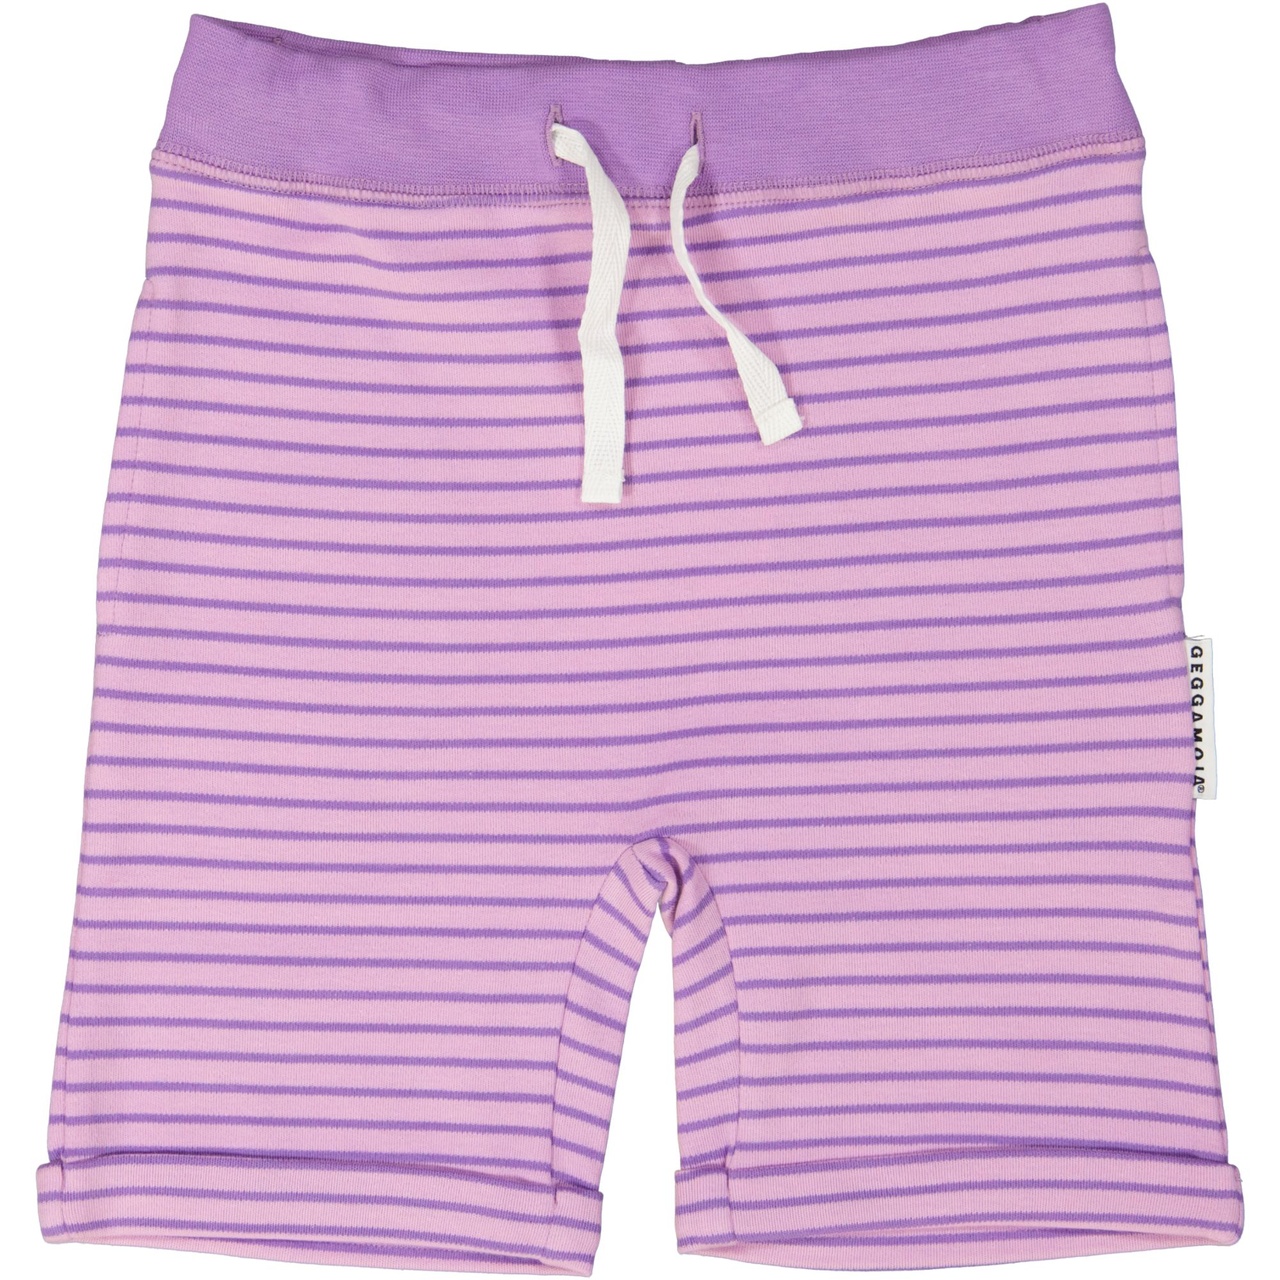 Shorts L.purple/purple 16